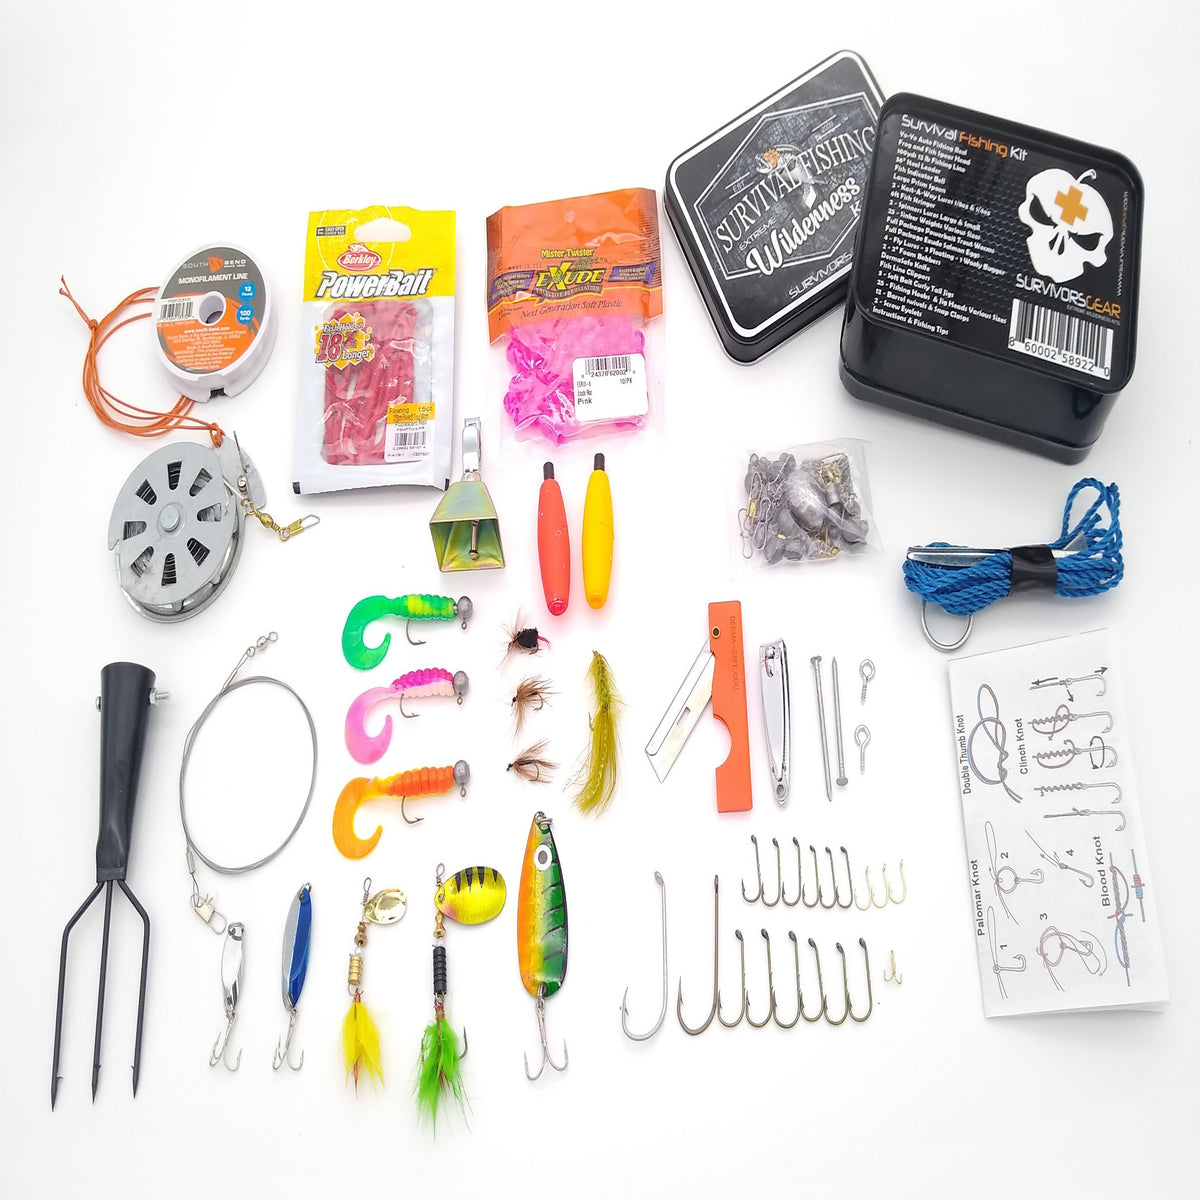 Survival Fishing Kit